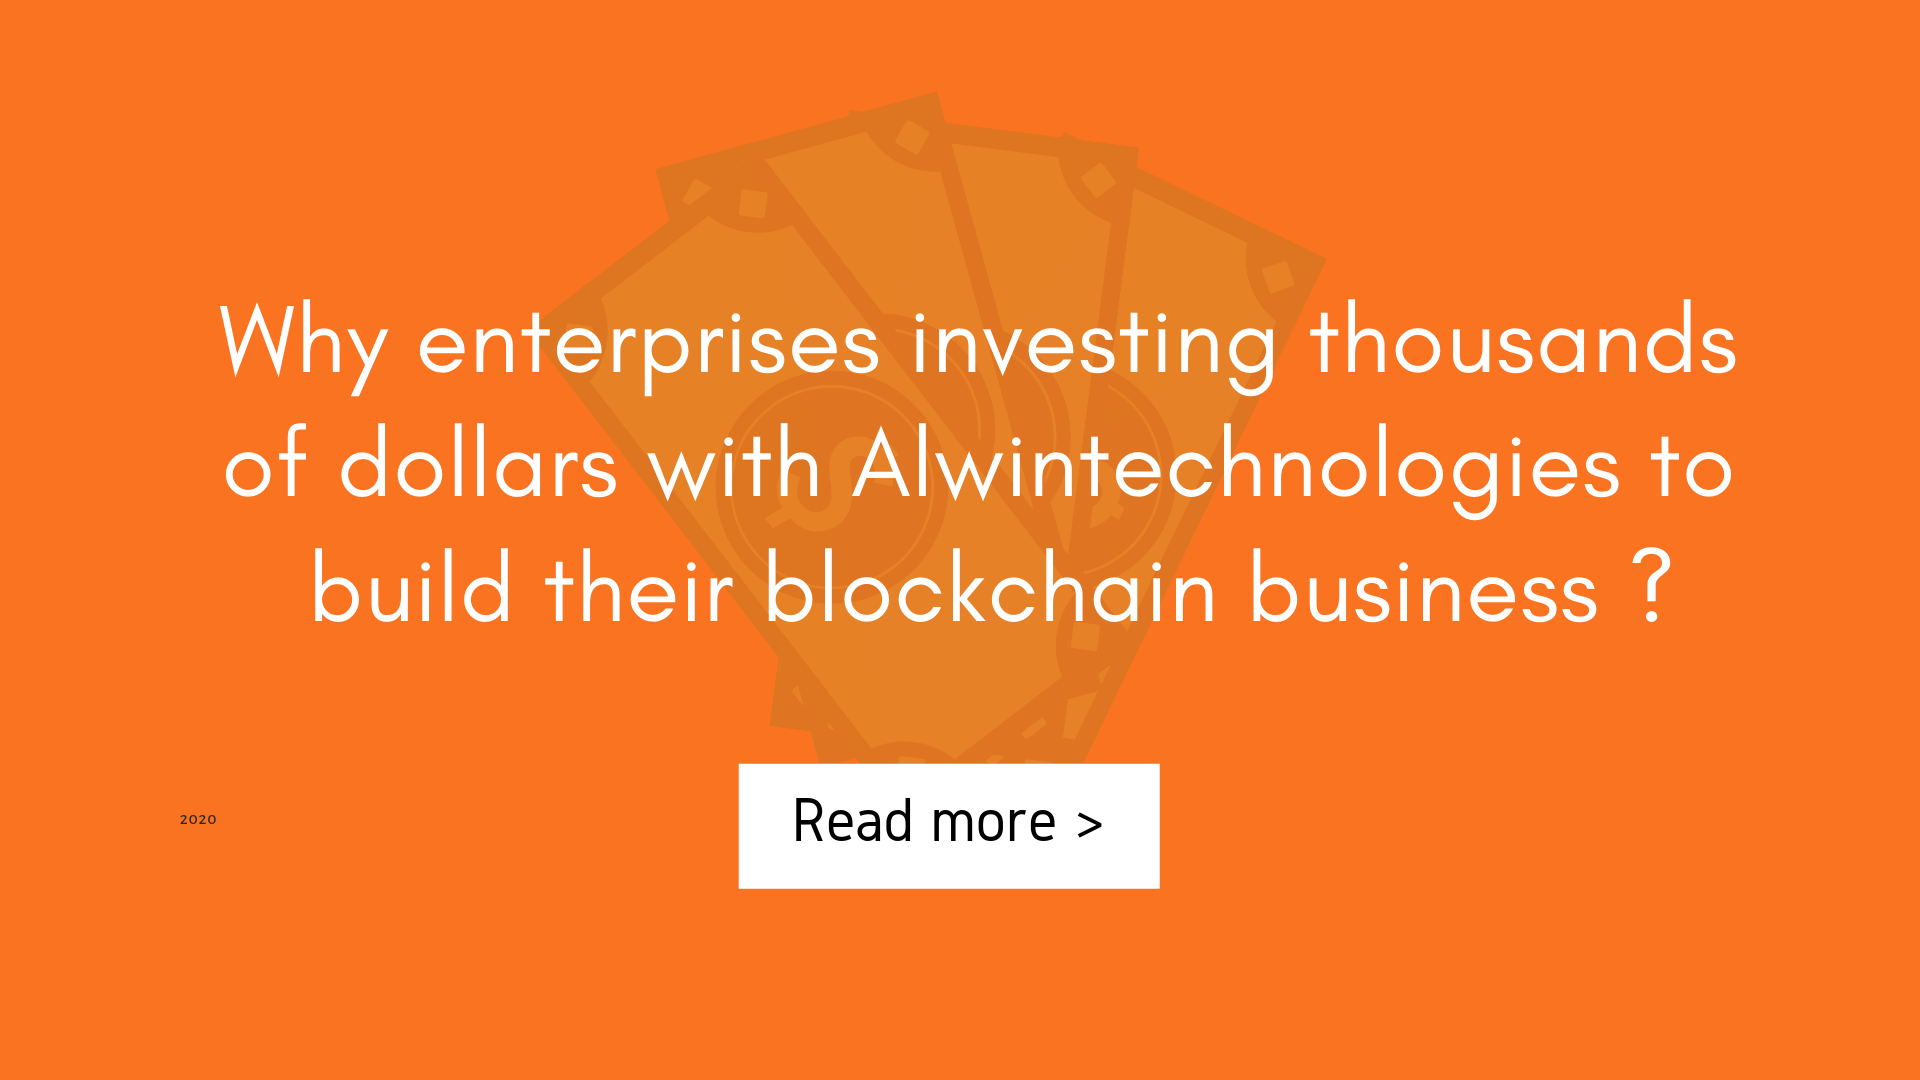 alwintechnologies-build-blockchain-business-application